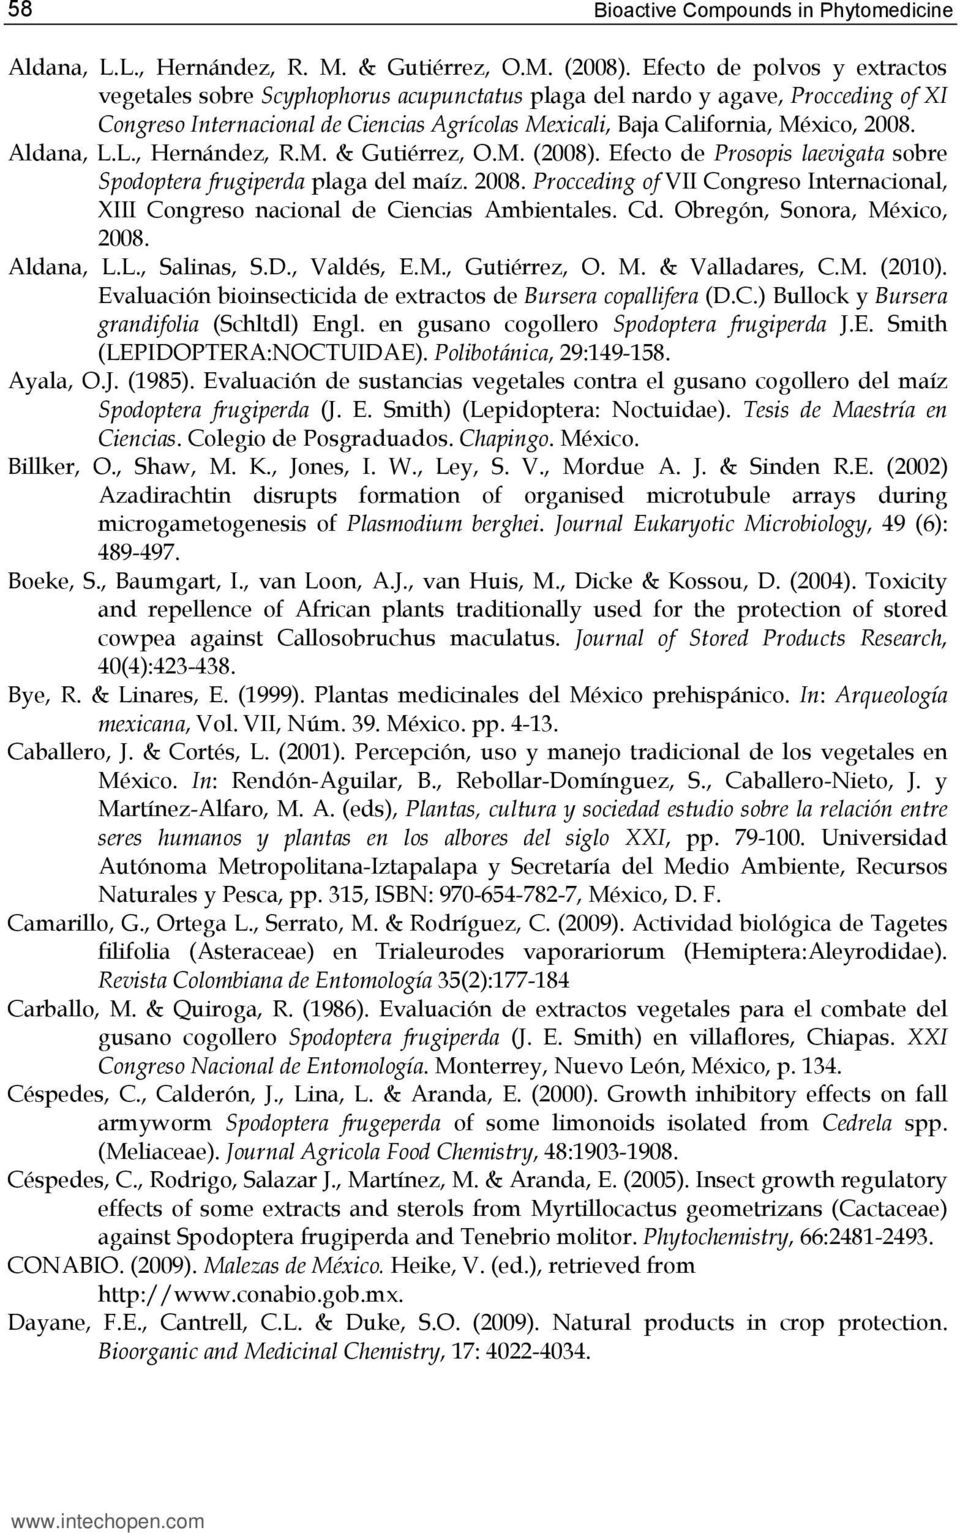 Aldana, L.L., Hernández, R.M. & Gutiérrez, O.M. (2008). Efecto de Prosopis laevigata sobre Spodoptera frugiperda plaga del maíz. 2008.